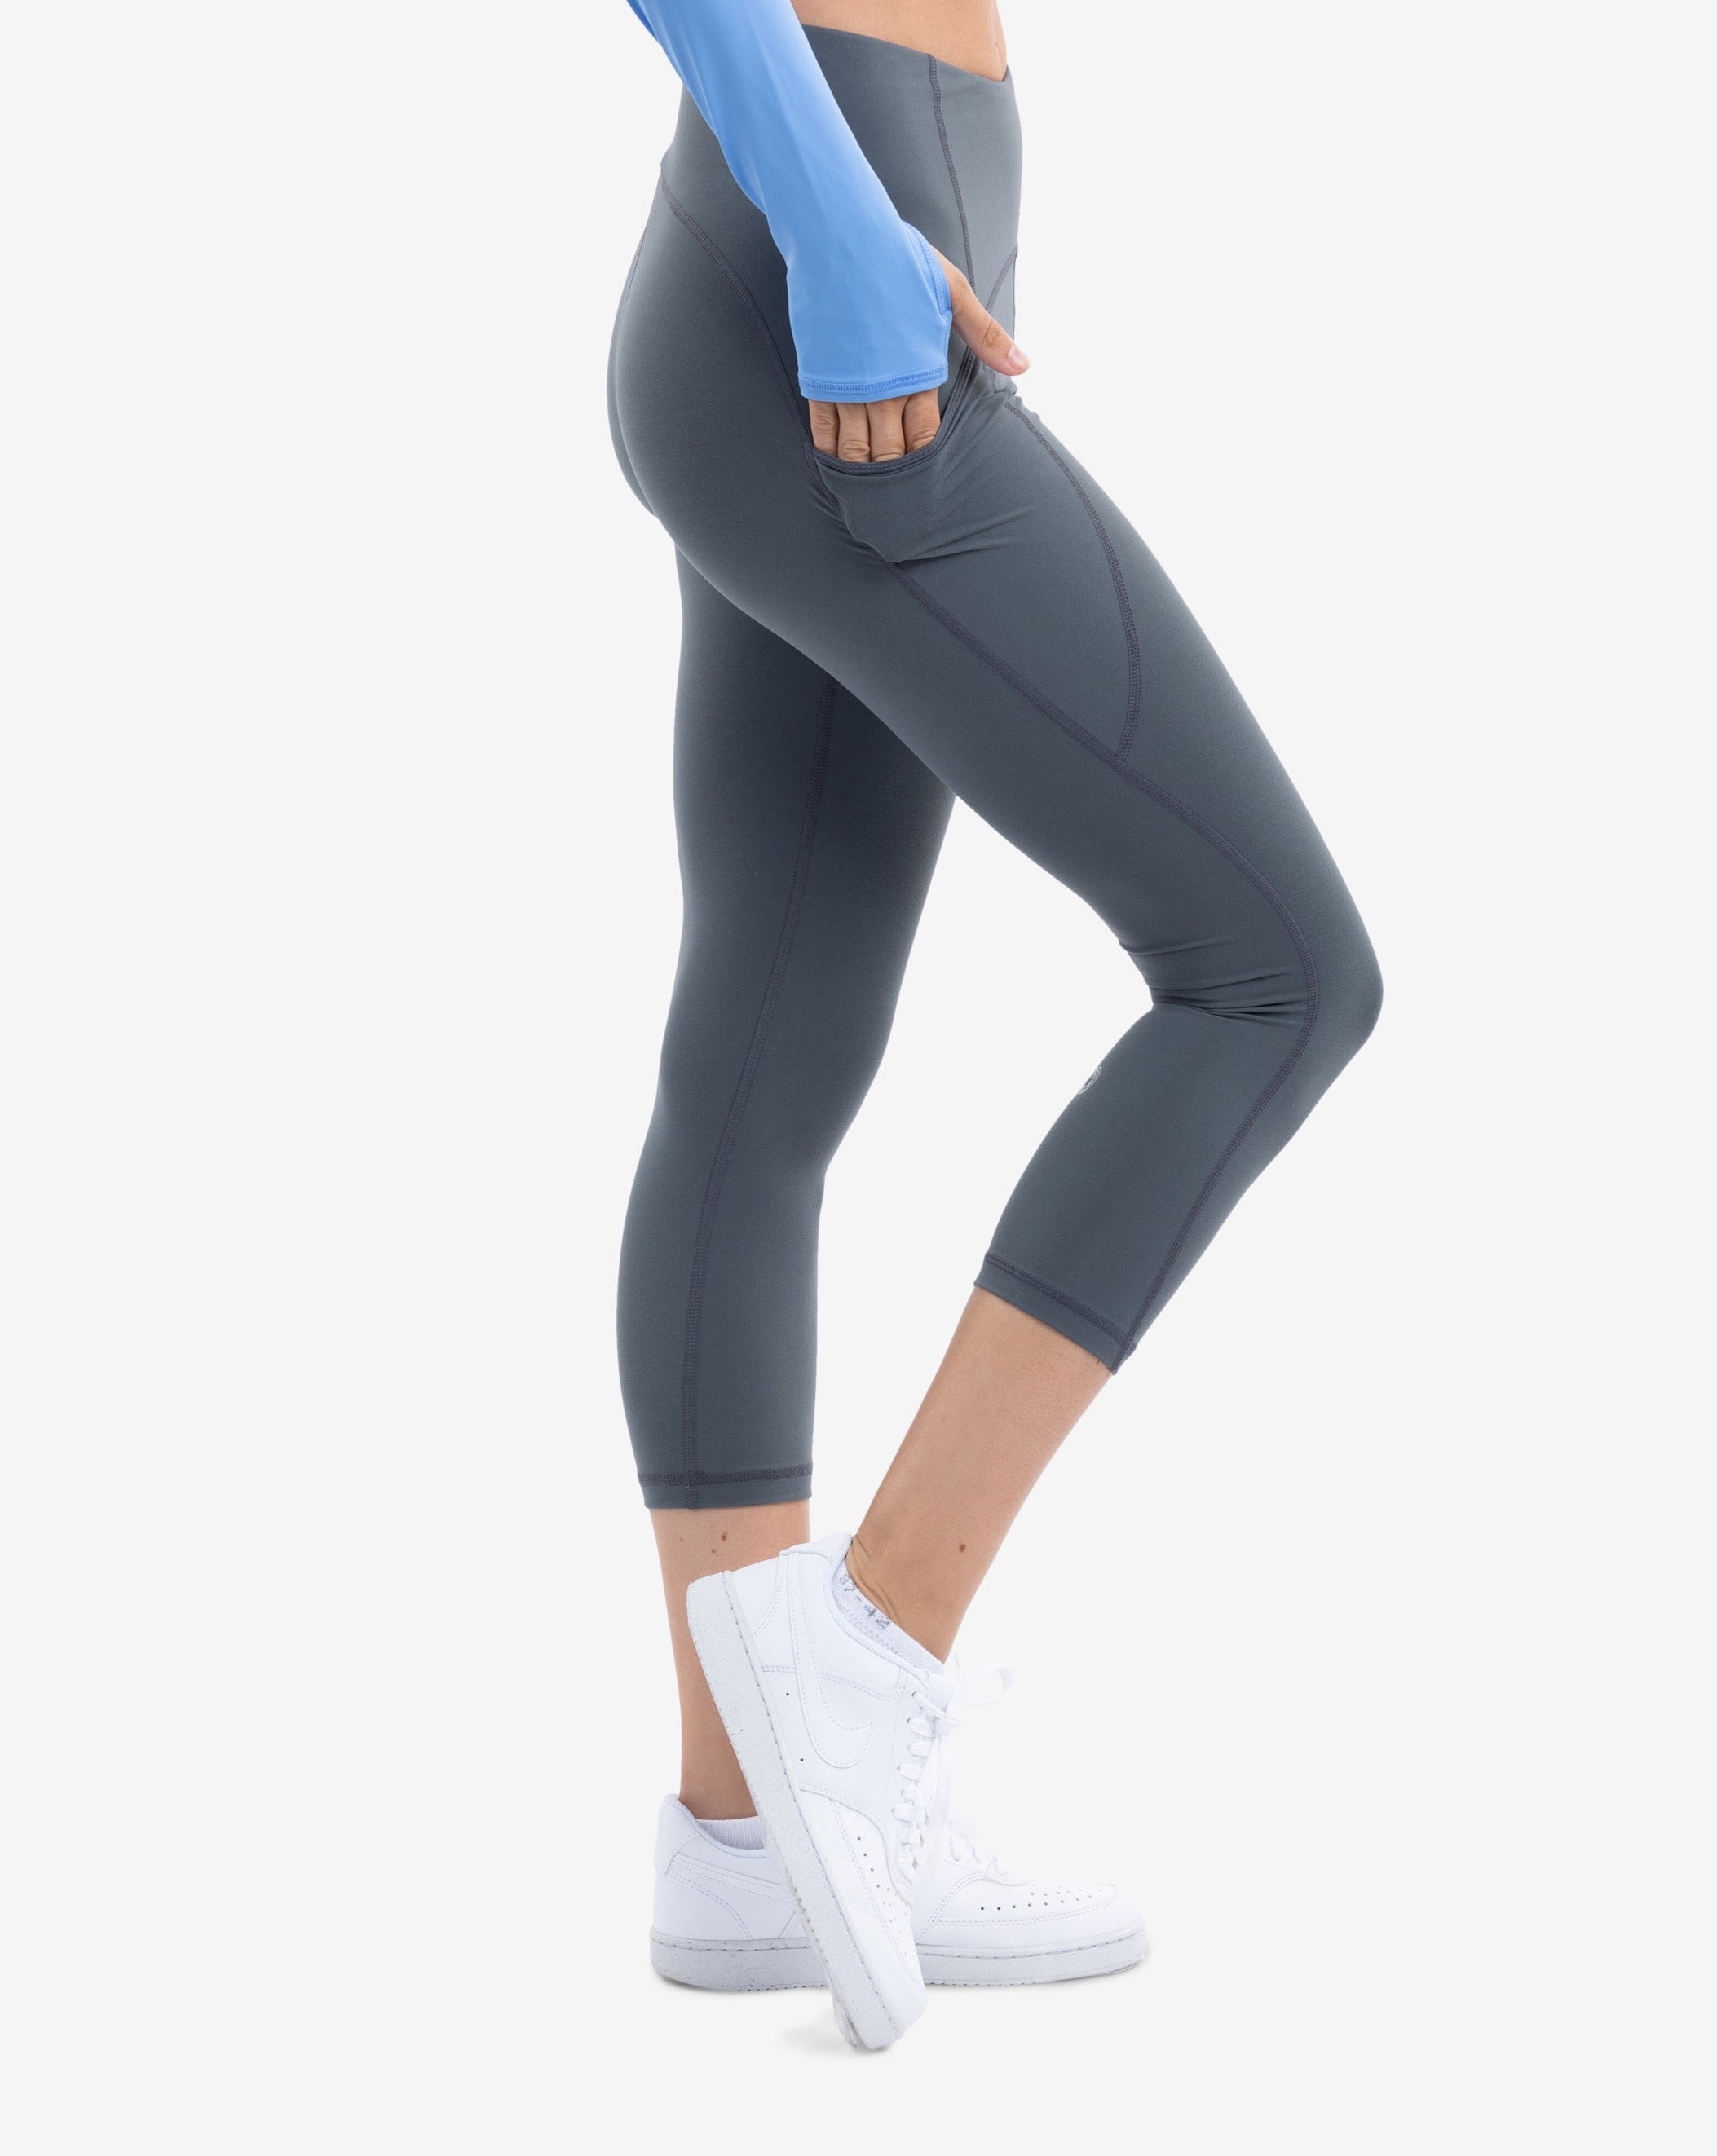 Women’s Active Compression Capri Leggings (Royal Blue, Medium/Large)